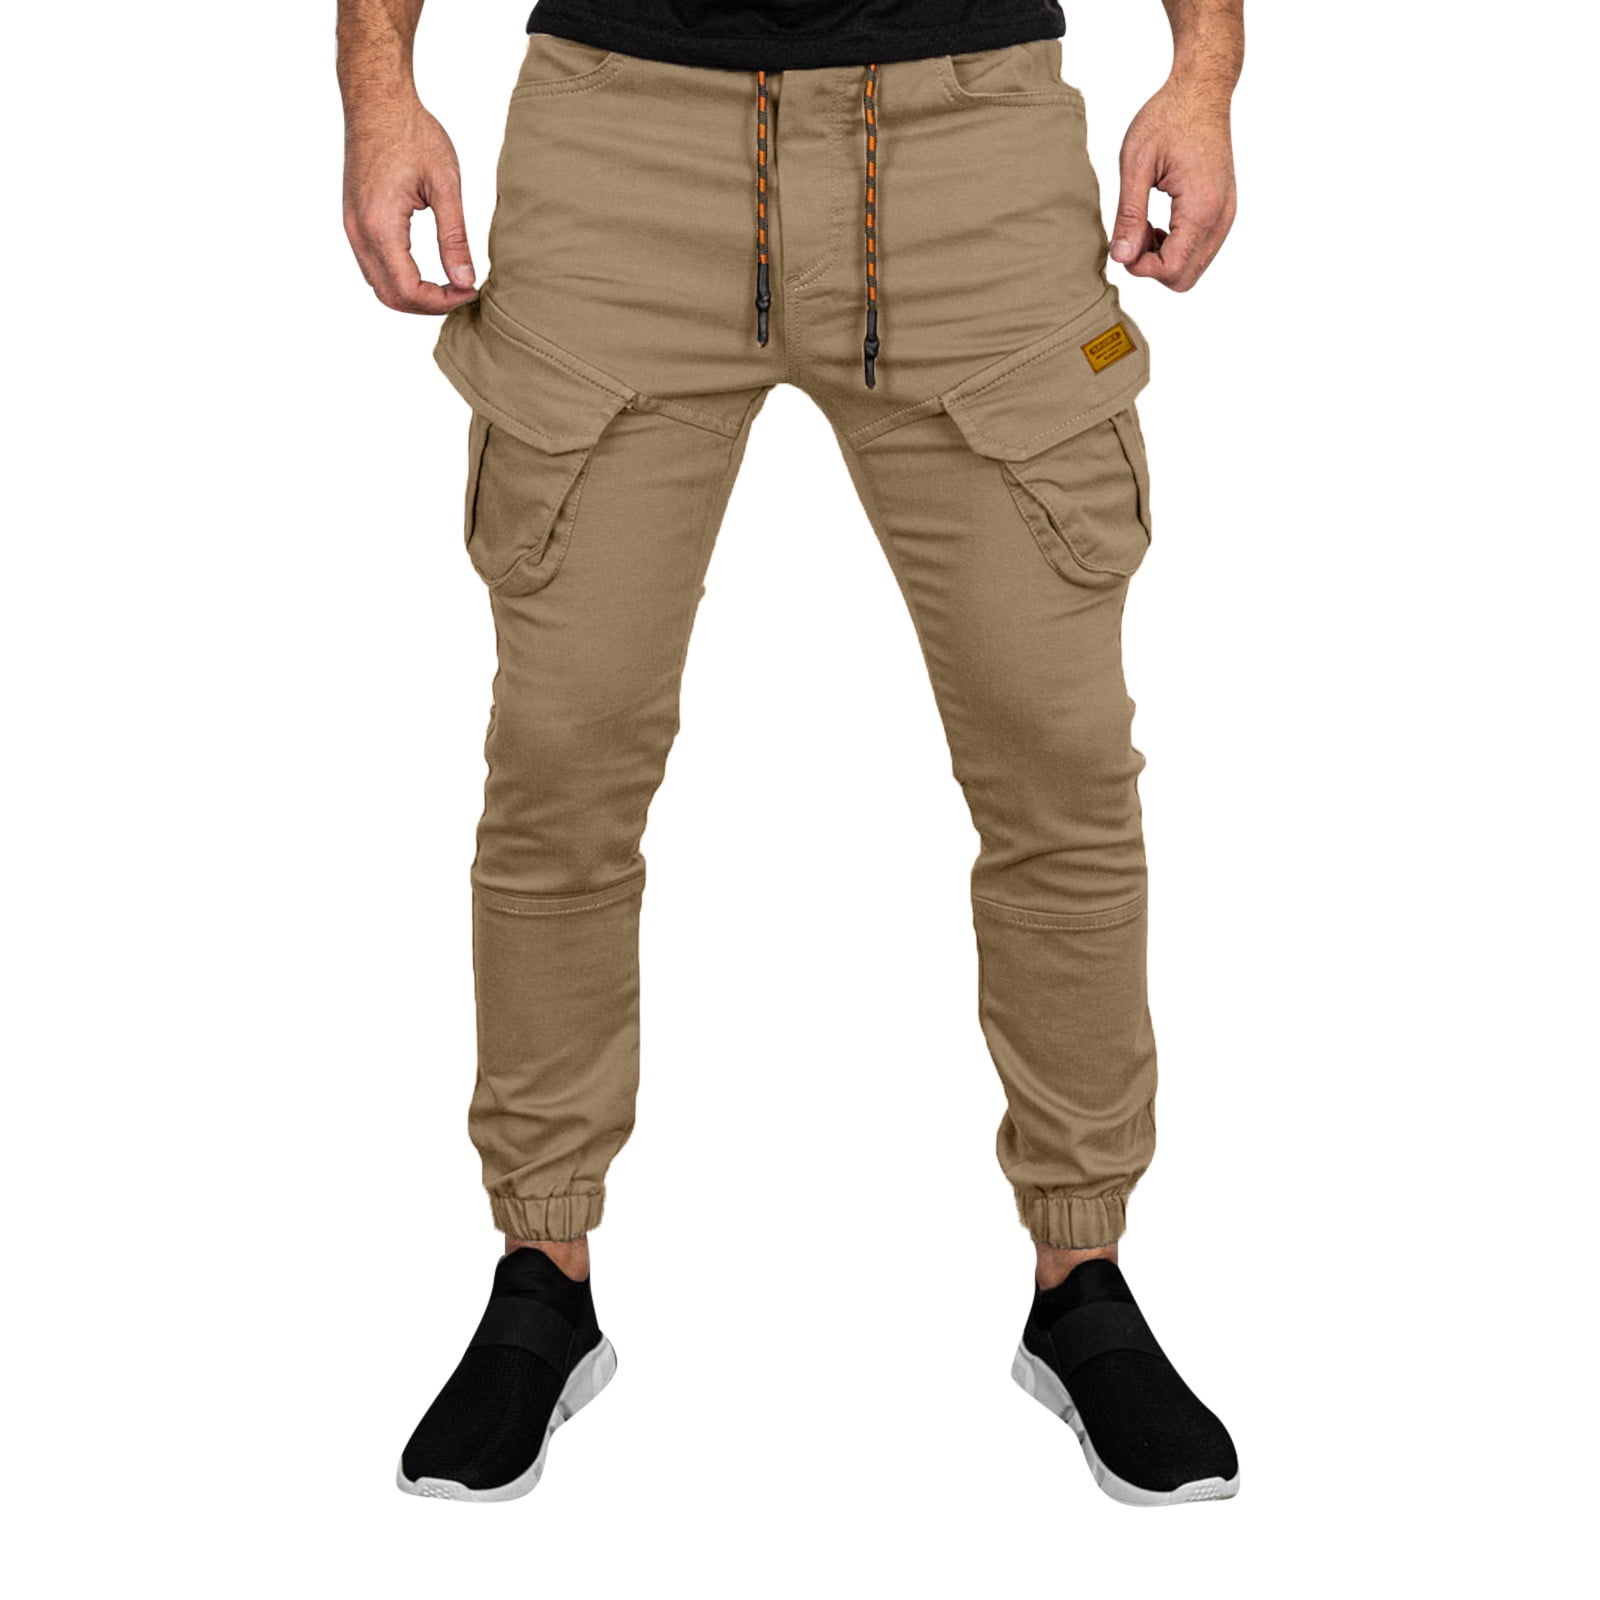 Odeerbi Thermal Underwear for Men Outdoor Heated Pants Pockets